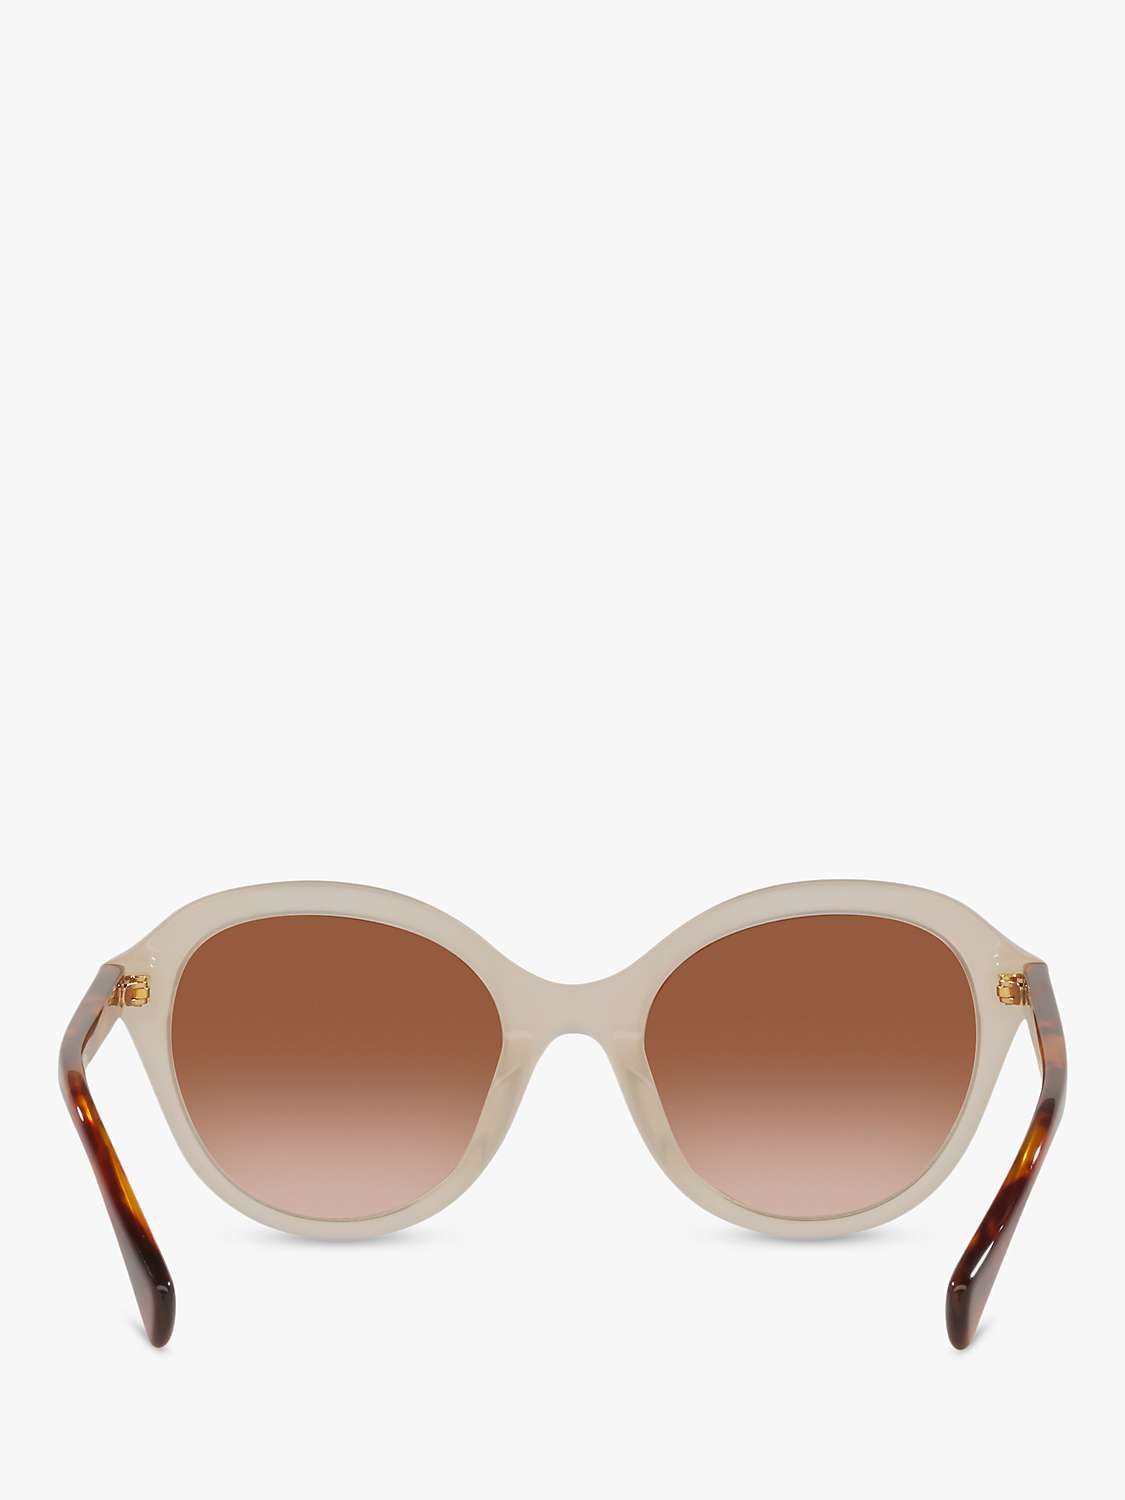 Buy Ralph RA5286U Women's Cat's Eye Sunglasses, Shiny Opal Cream Online at johnlewis.com